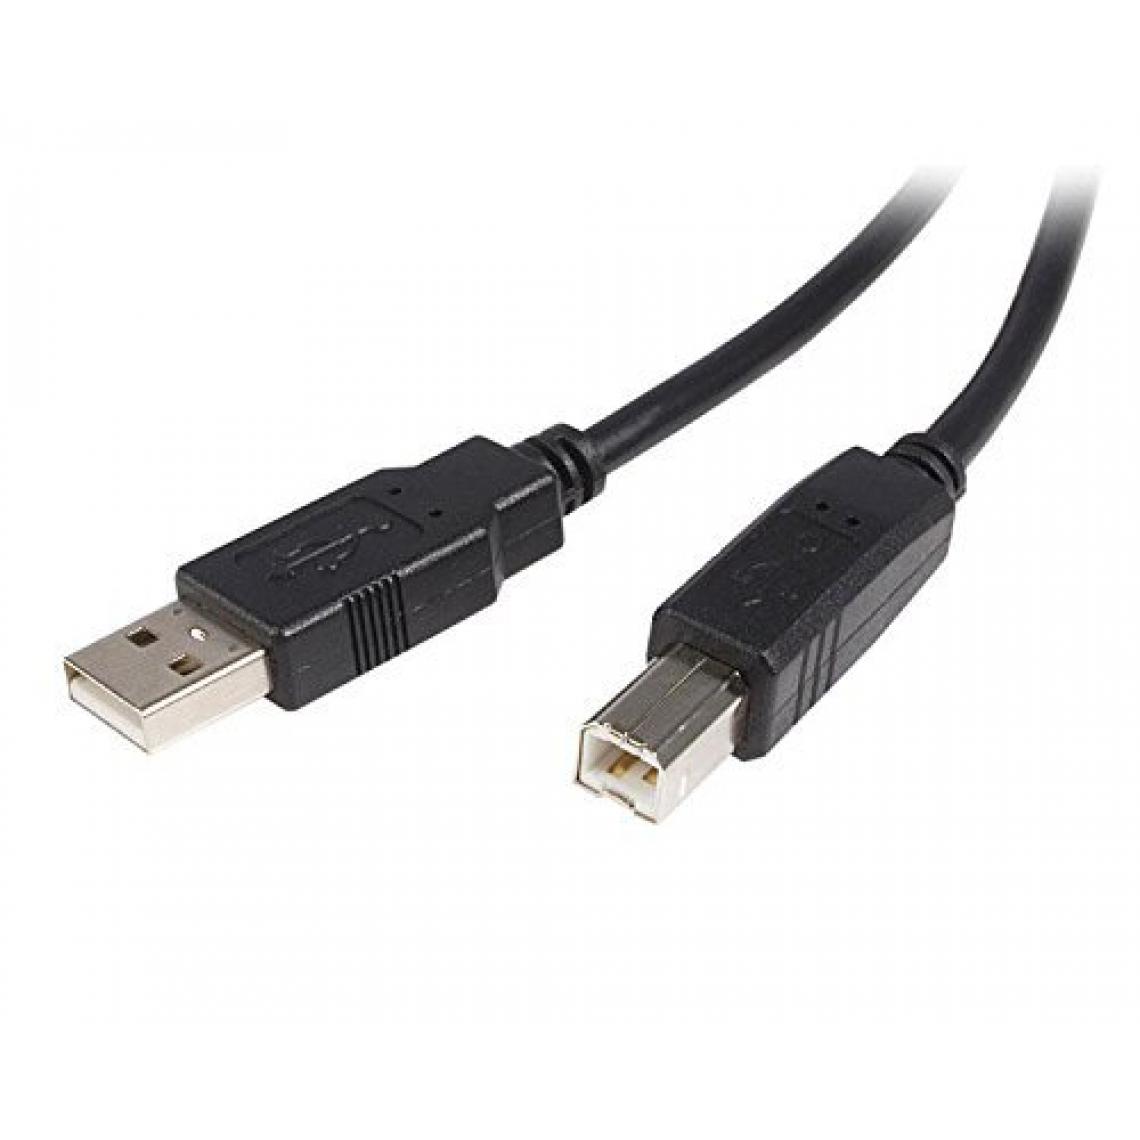 Ineck - INECK - Cable USB 2.0 A vers B de 3 m - Cordon USB A vers USB - Câble antenne